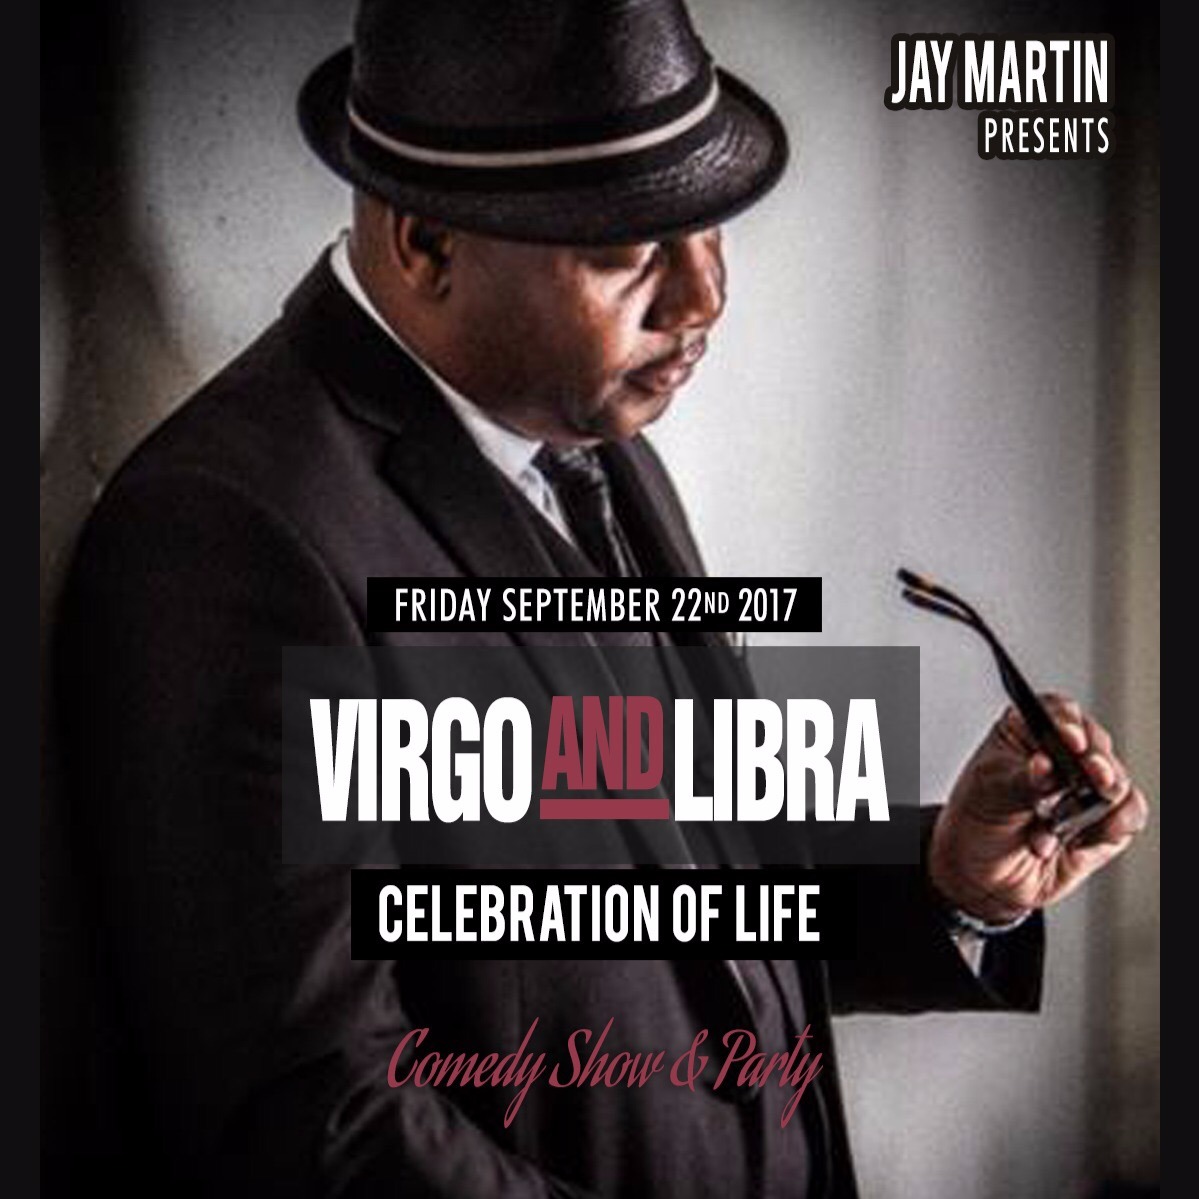 VIRGO AND LIBRA - CELEBRATION OF LIFE 2017 Jay Martin's Birthday